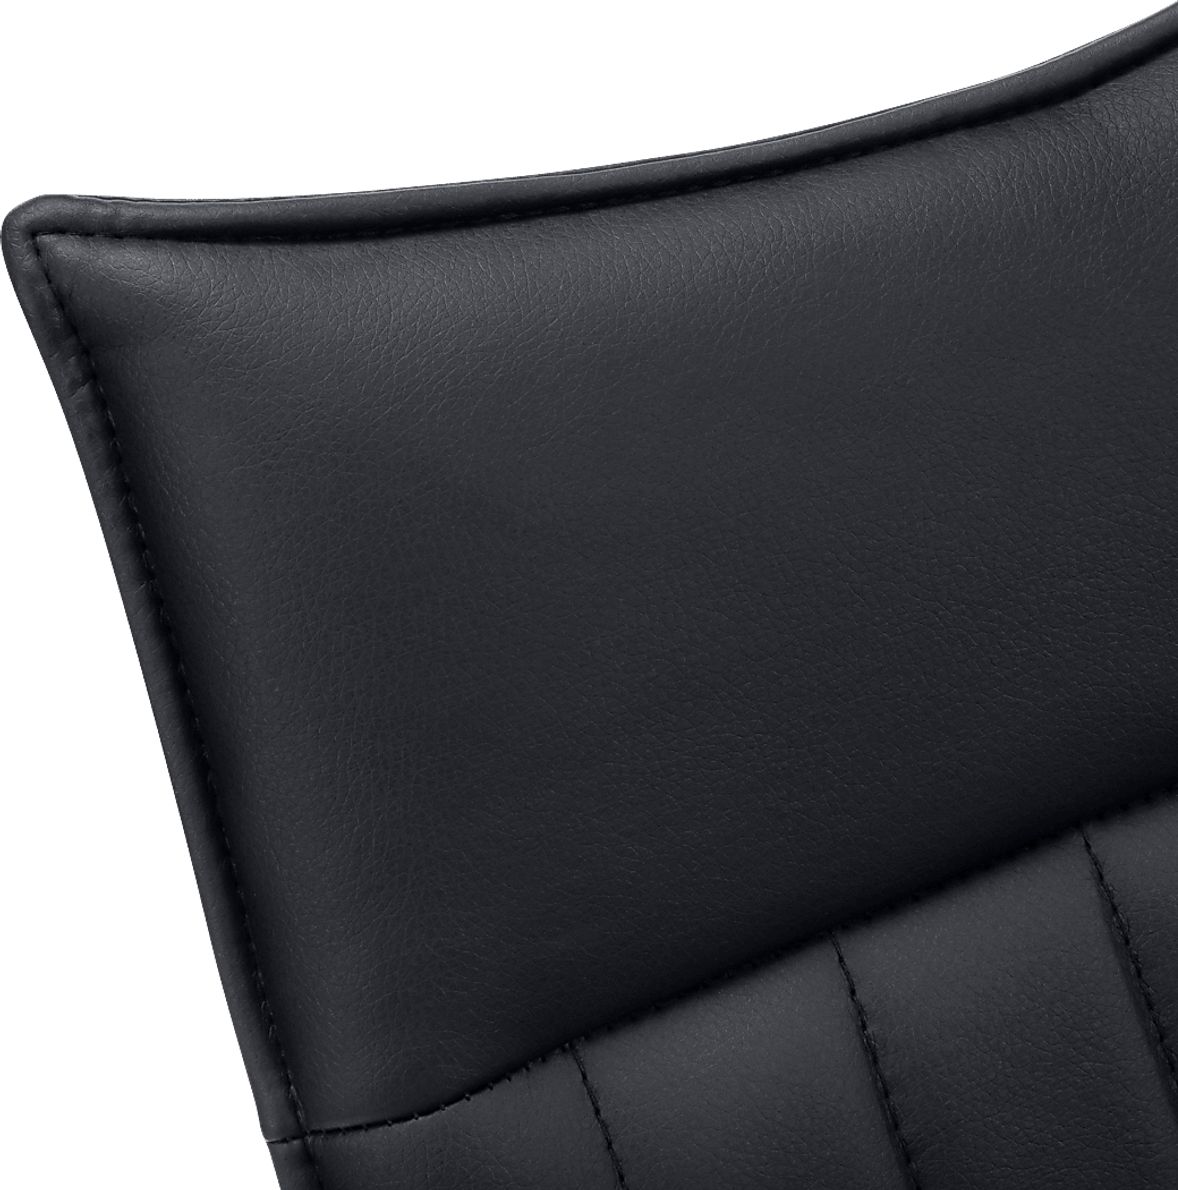 Appaloosa Black Side Chair, Set of 2